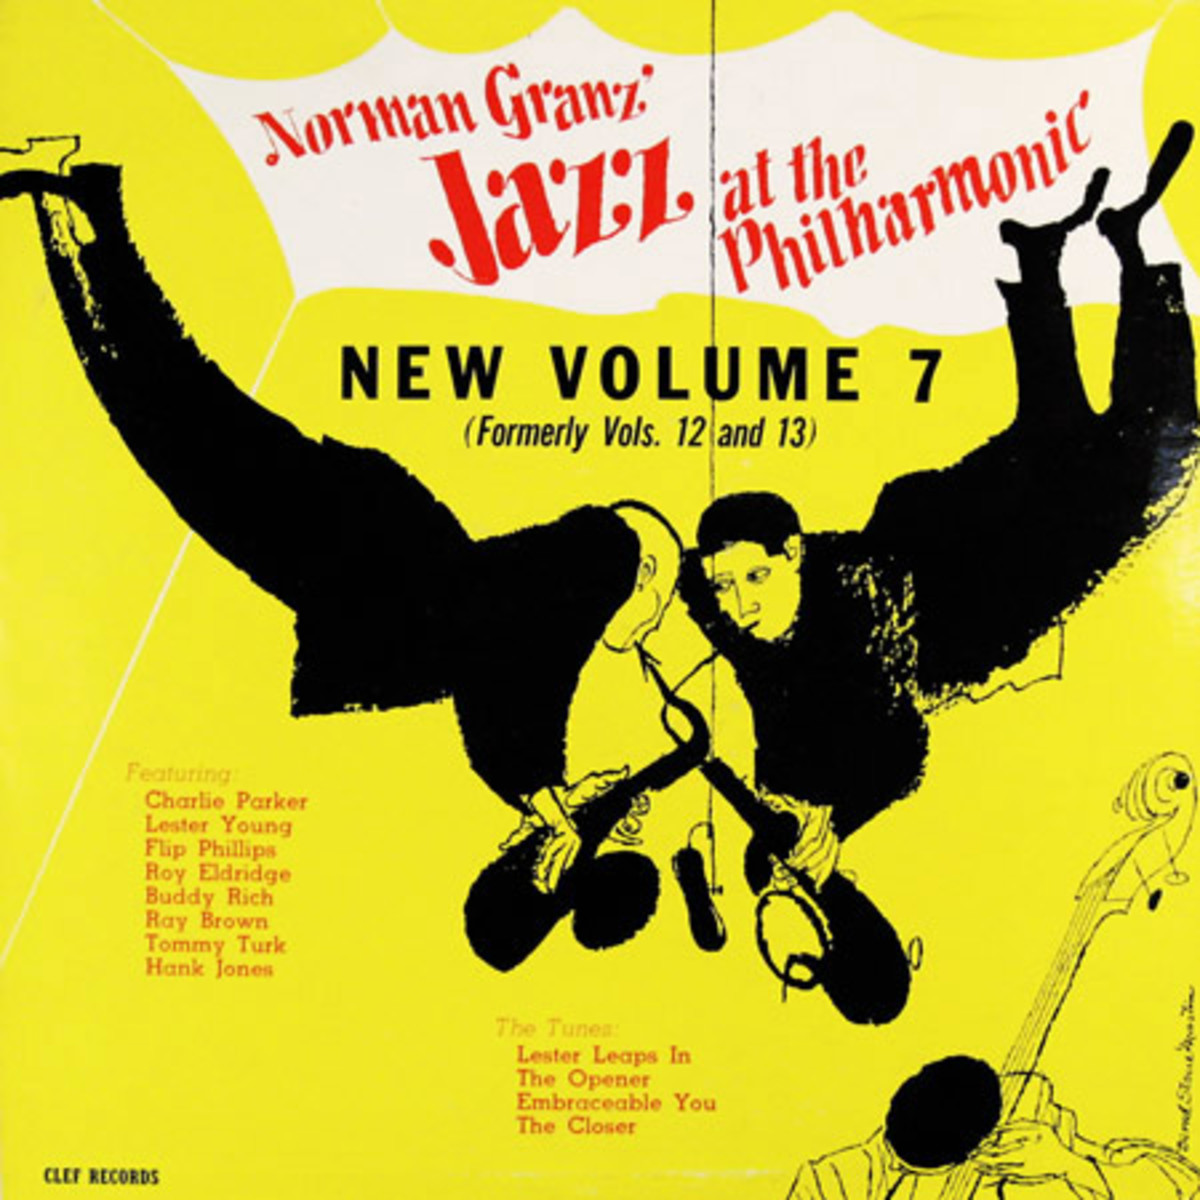 Jazz at the Philharmonic, Volume 7